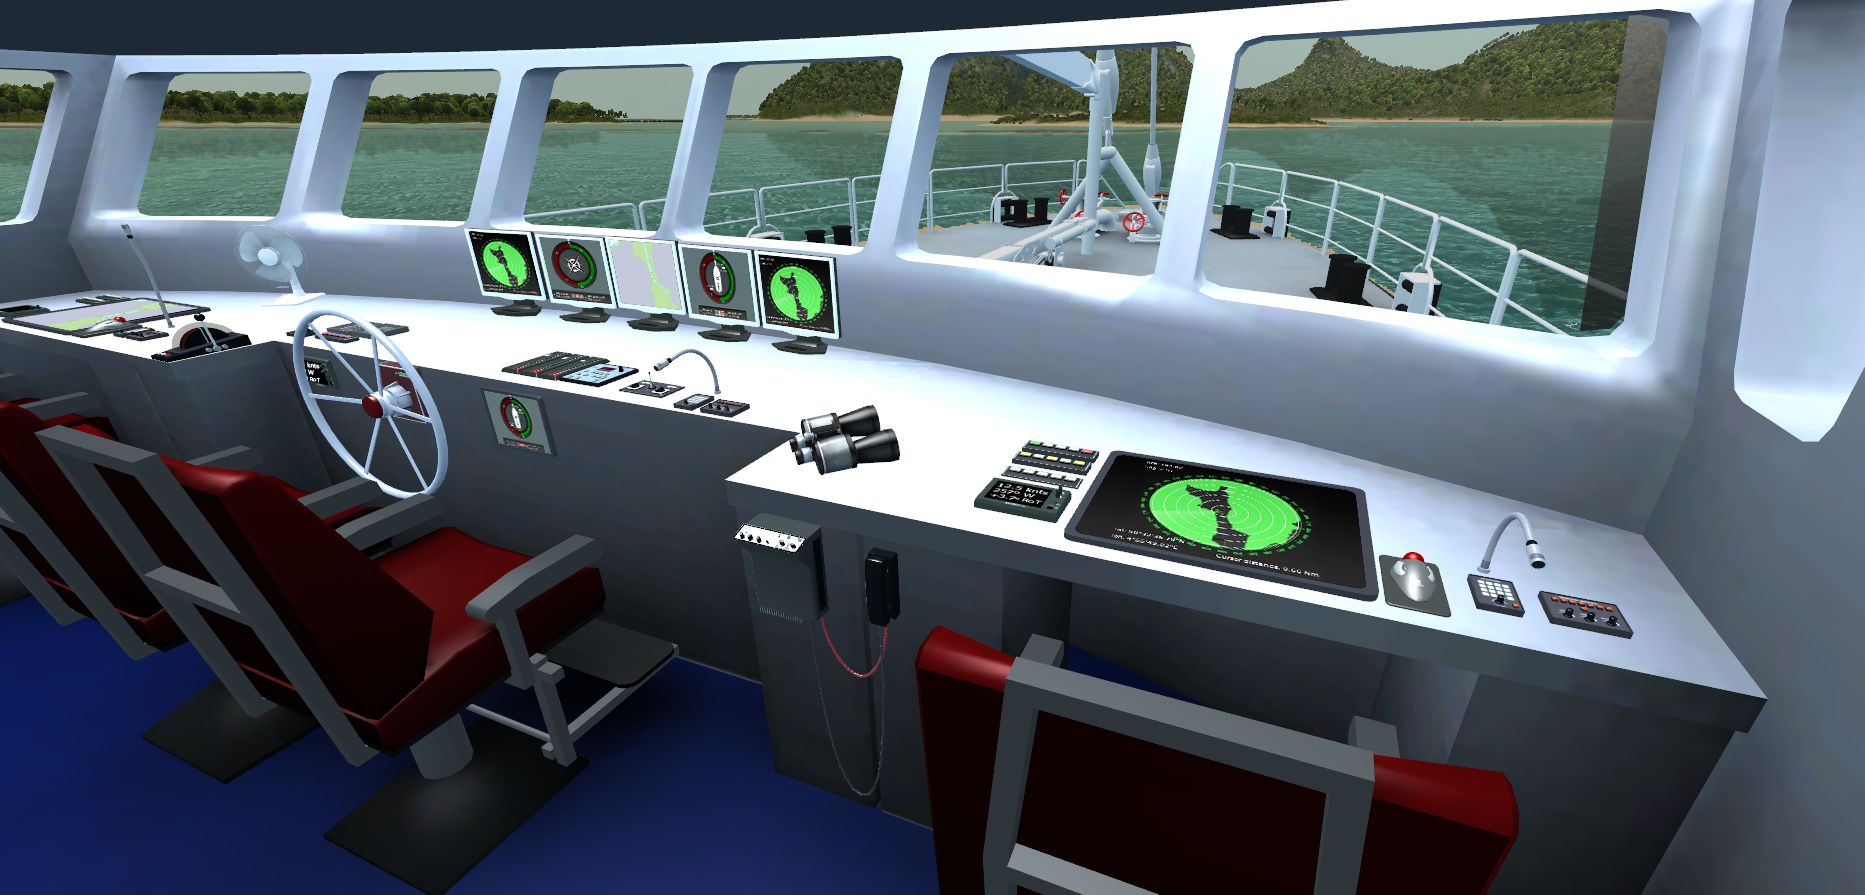 Ship Simulator Extremes On Steam - boat sinking simulator roblox